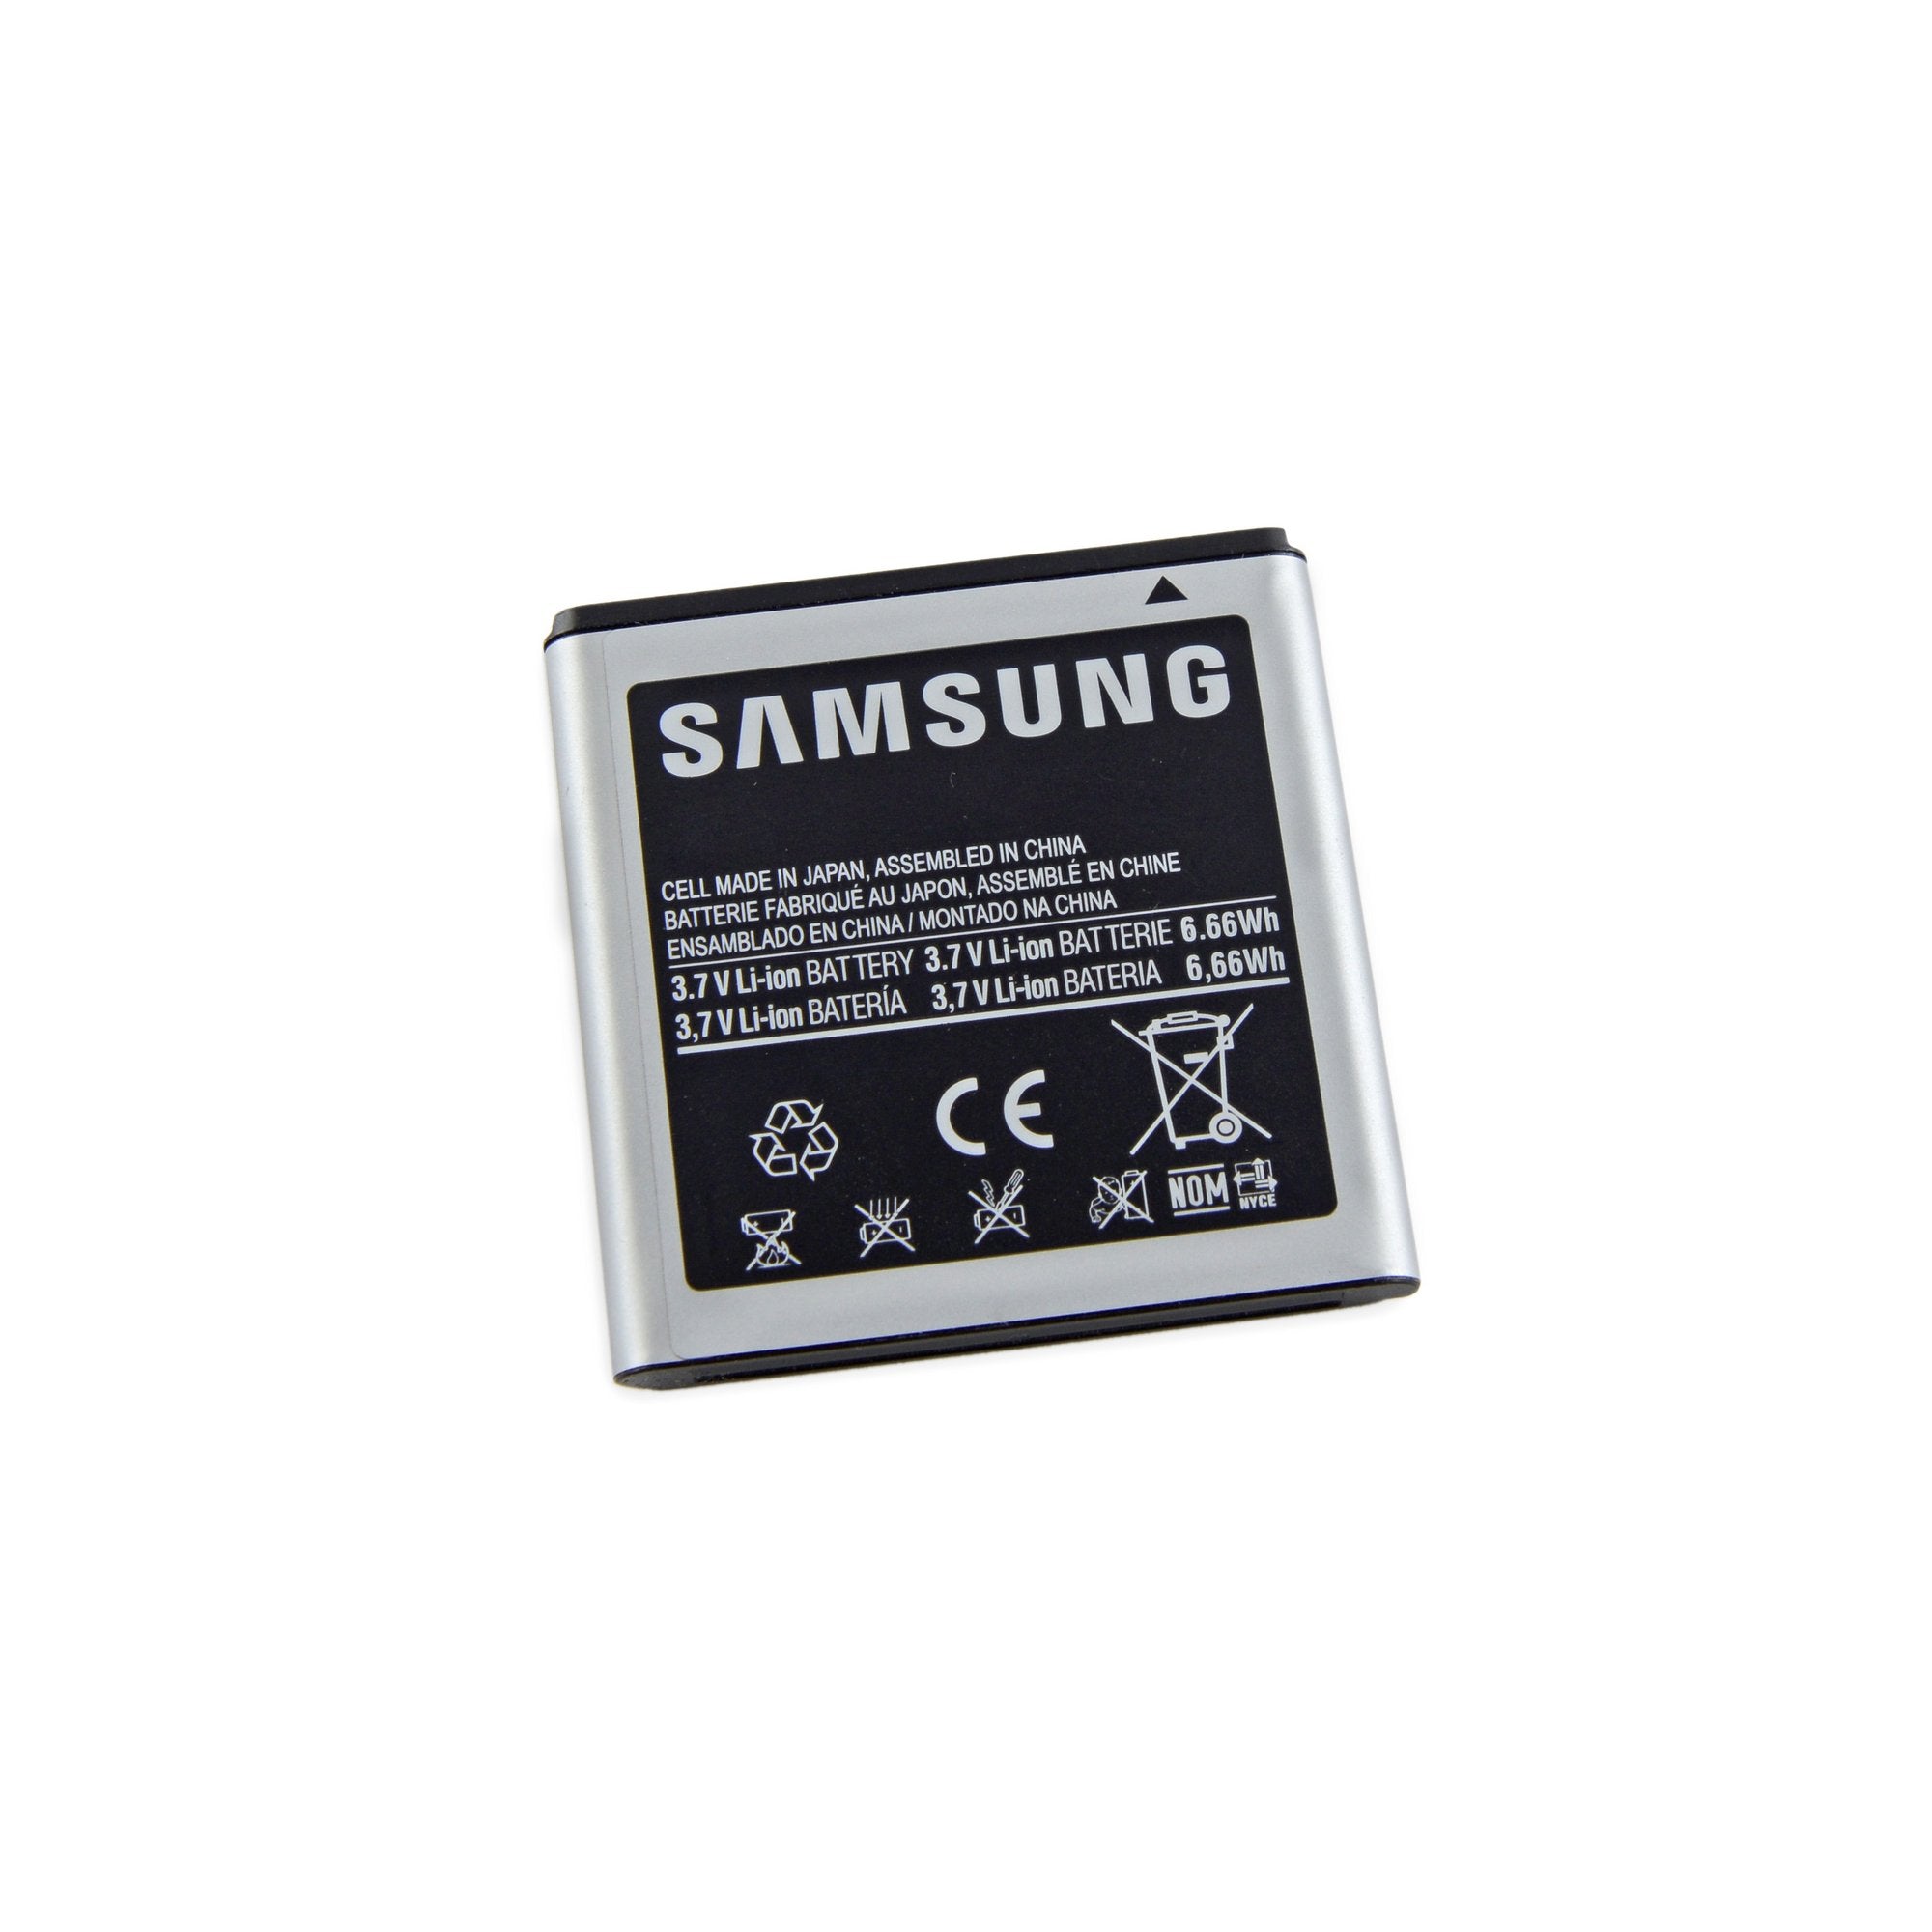 Galaxy S II Battery EB625152VA